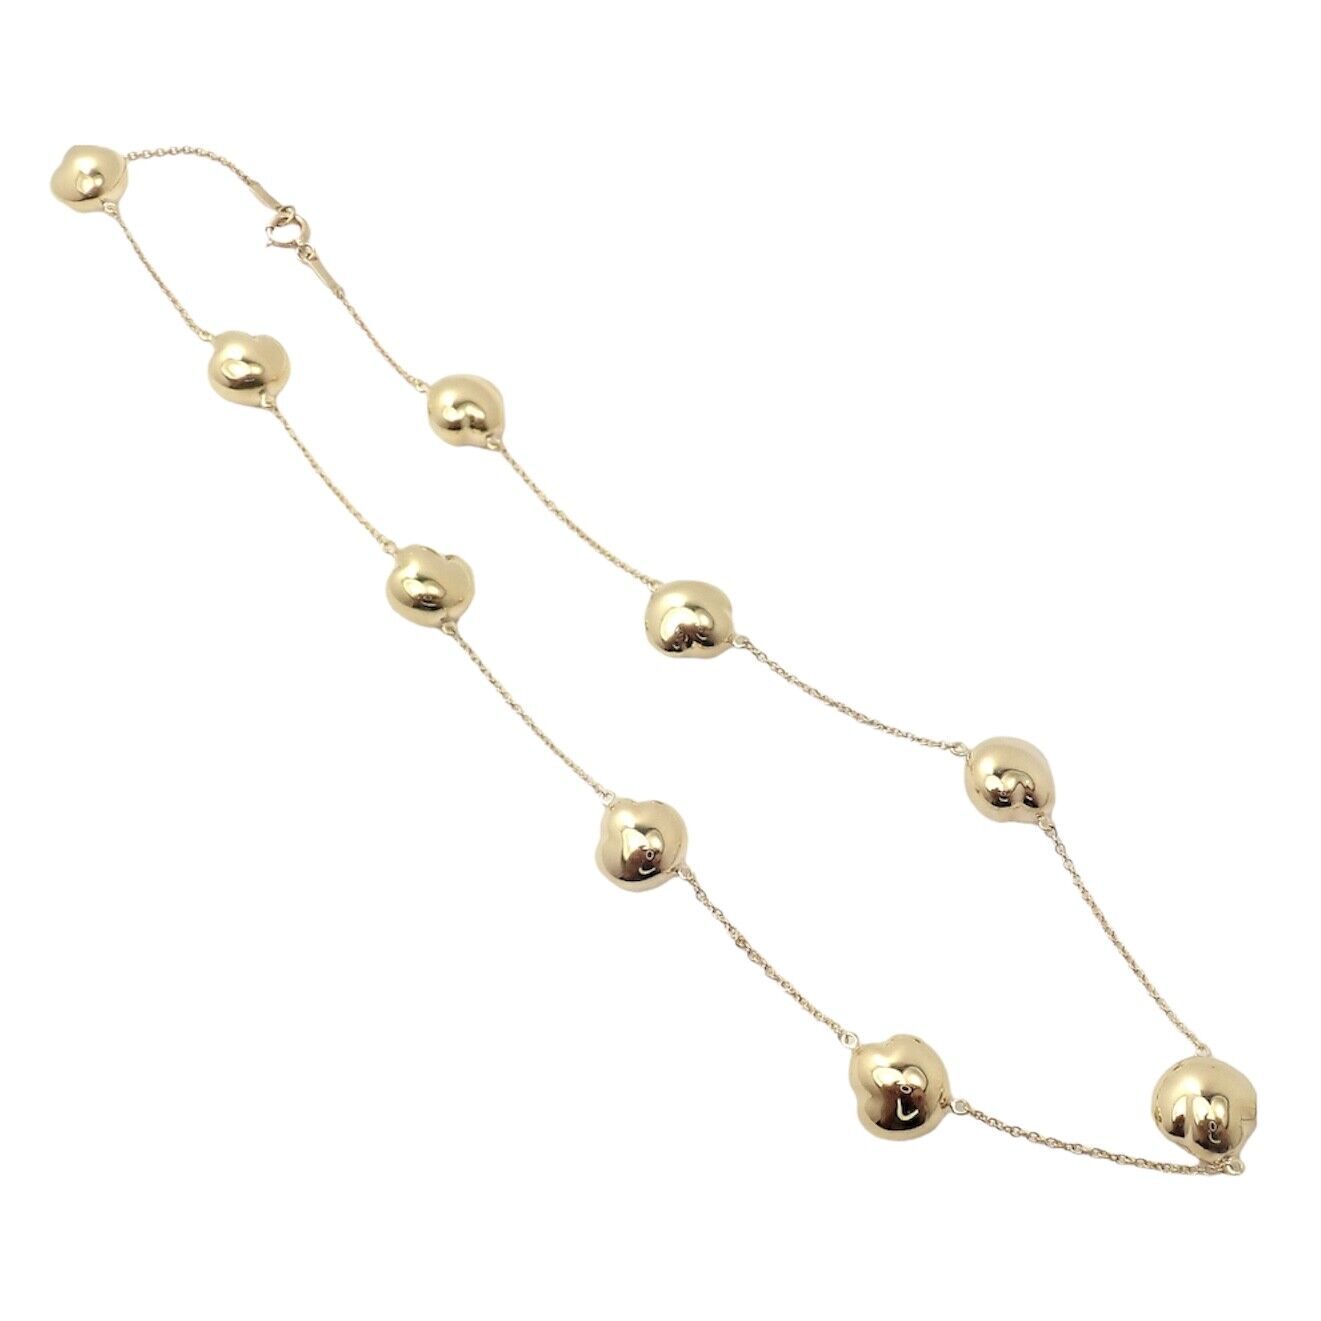 Rare! Louis Vuitton 18K Yellow Gold Large Pendant Necklace 27.8g